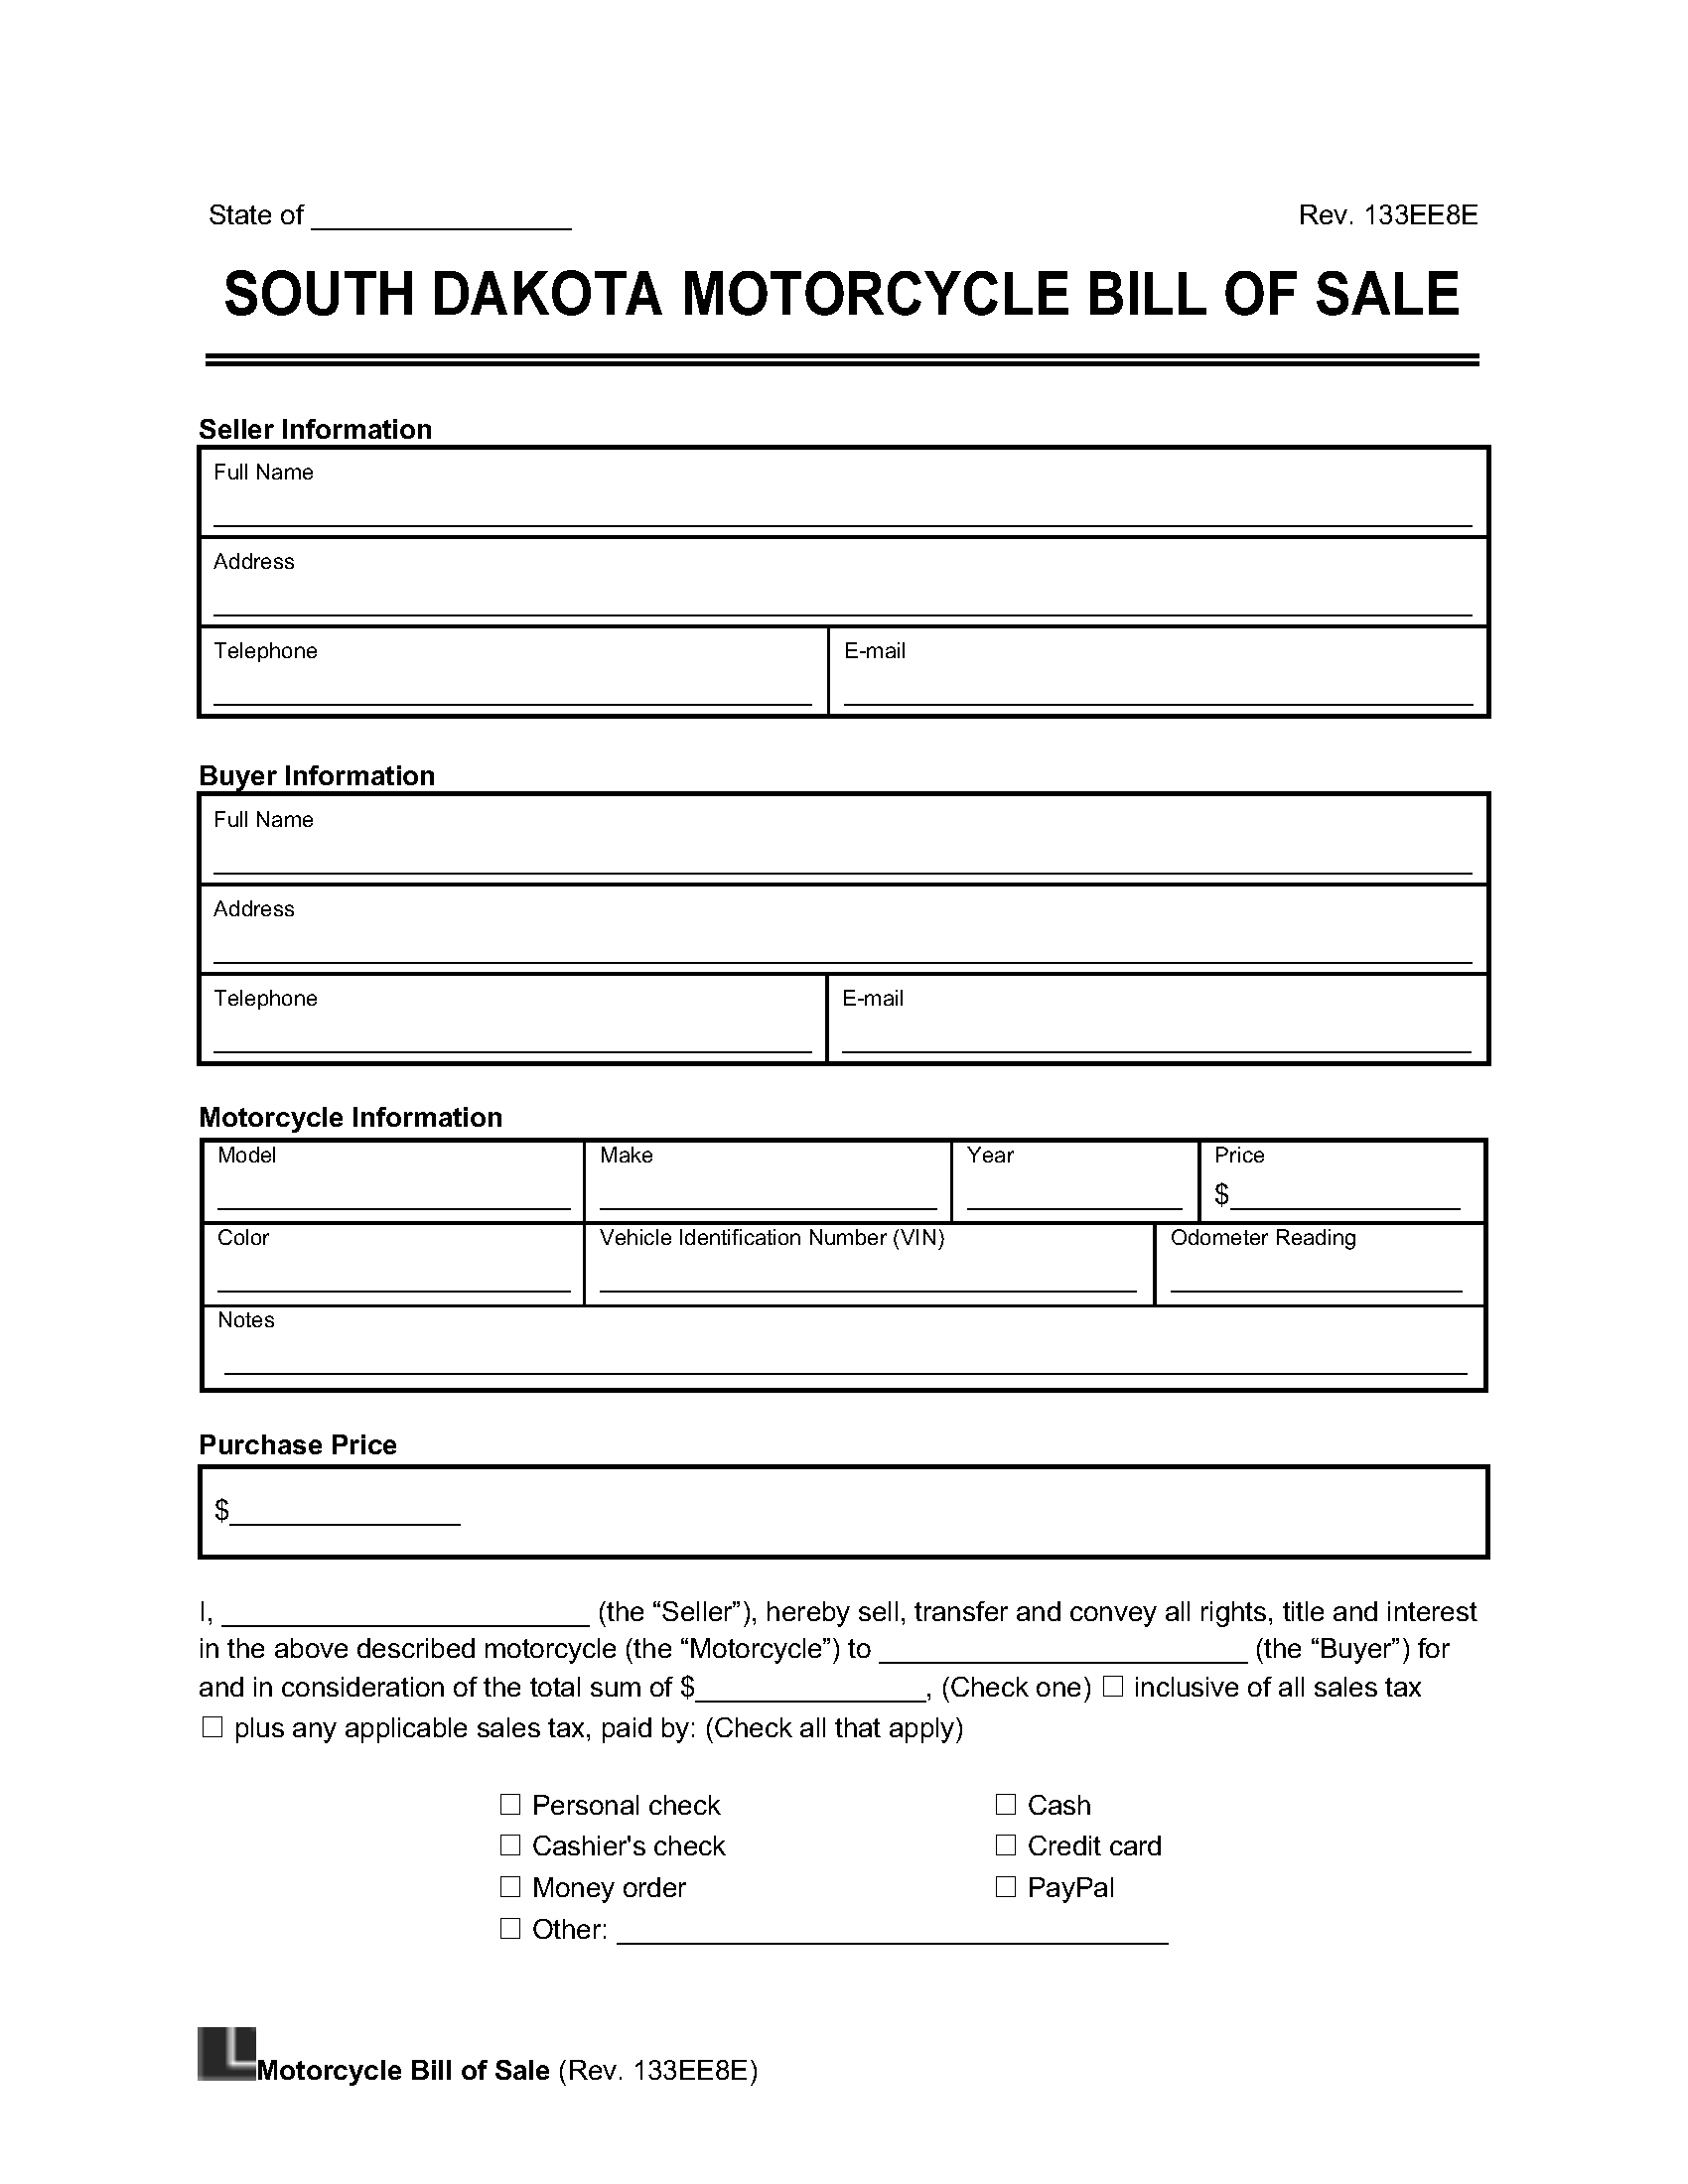 south dakota motorcycle bill of sale